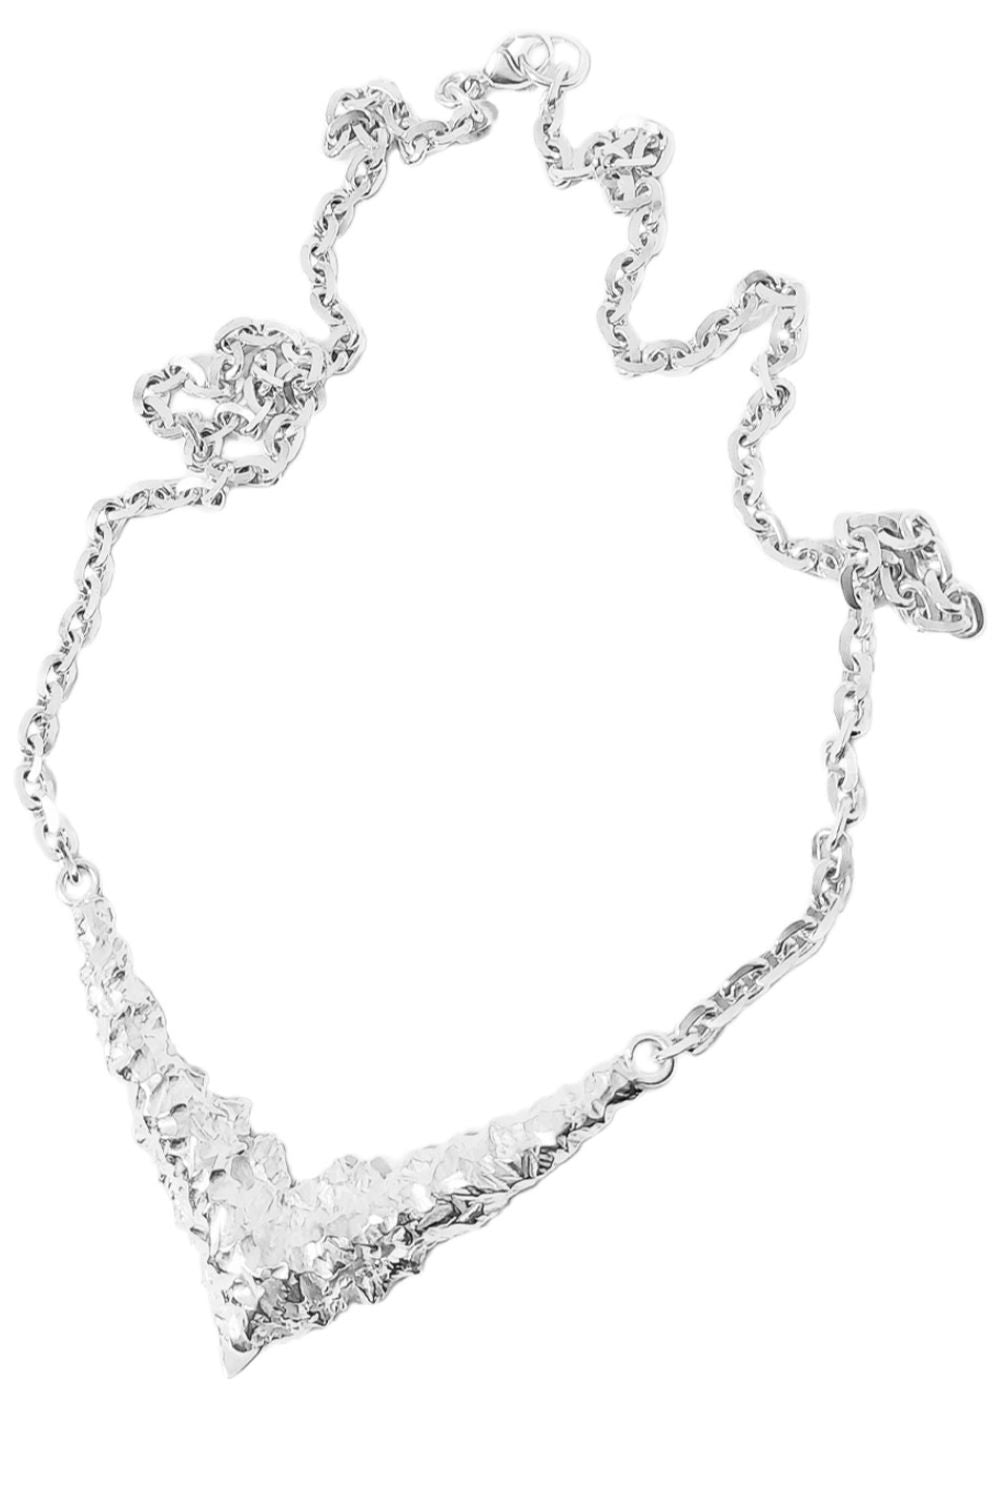 vanadis necklace in silver by Annika Burman